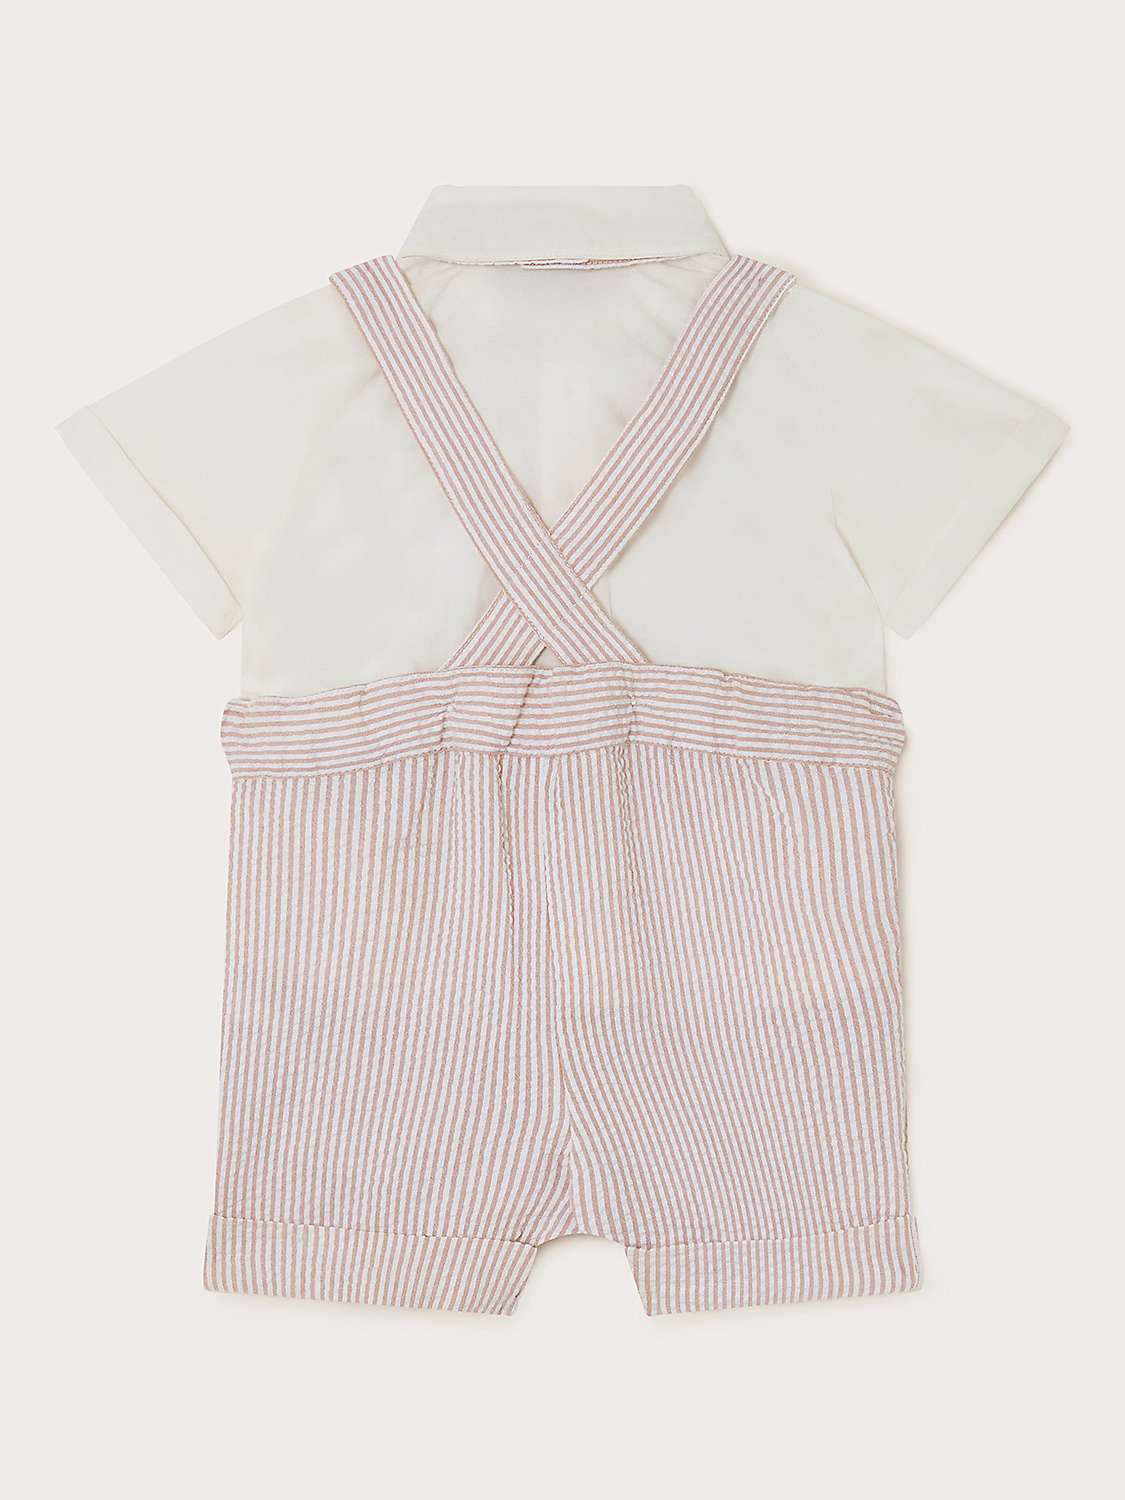 Buy Monsoon Baby Sammy Stripe Brace Shorts, Shirt & Bow Tie Set, Stone Online at johnlewis.com